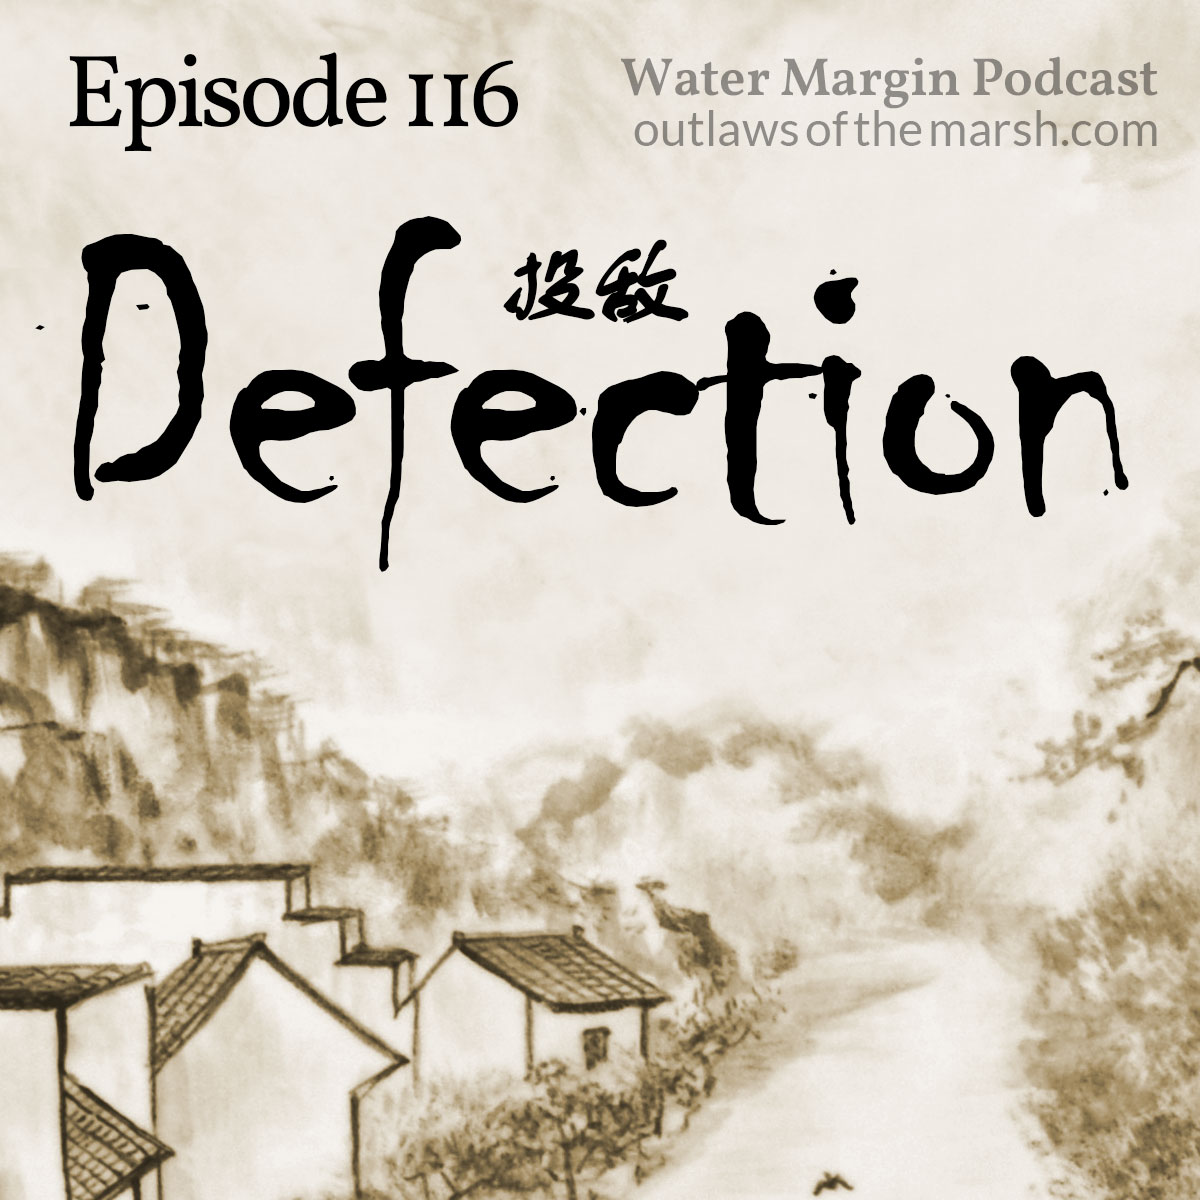 Water Margin Podcast: Episode 116